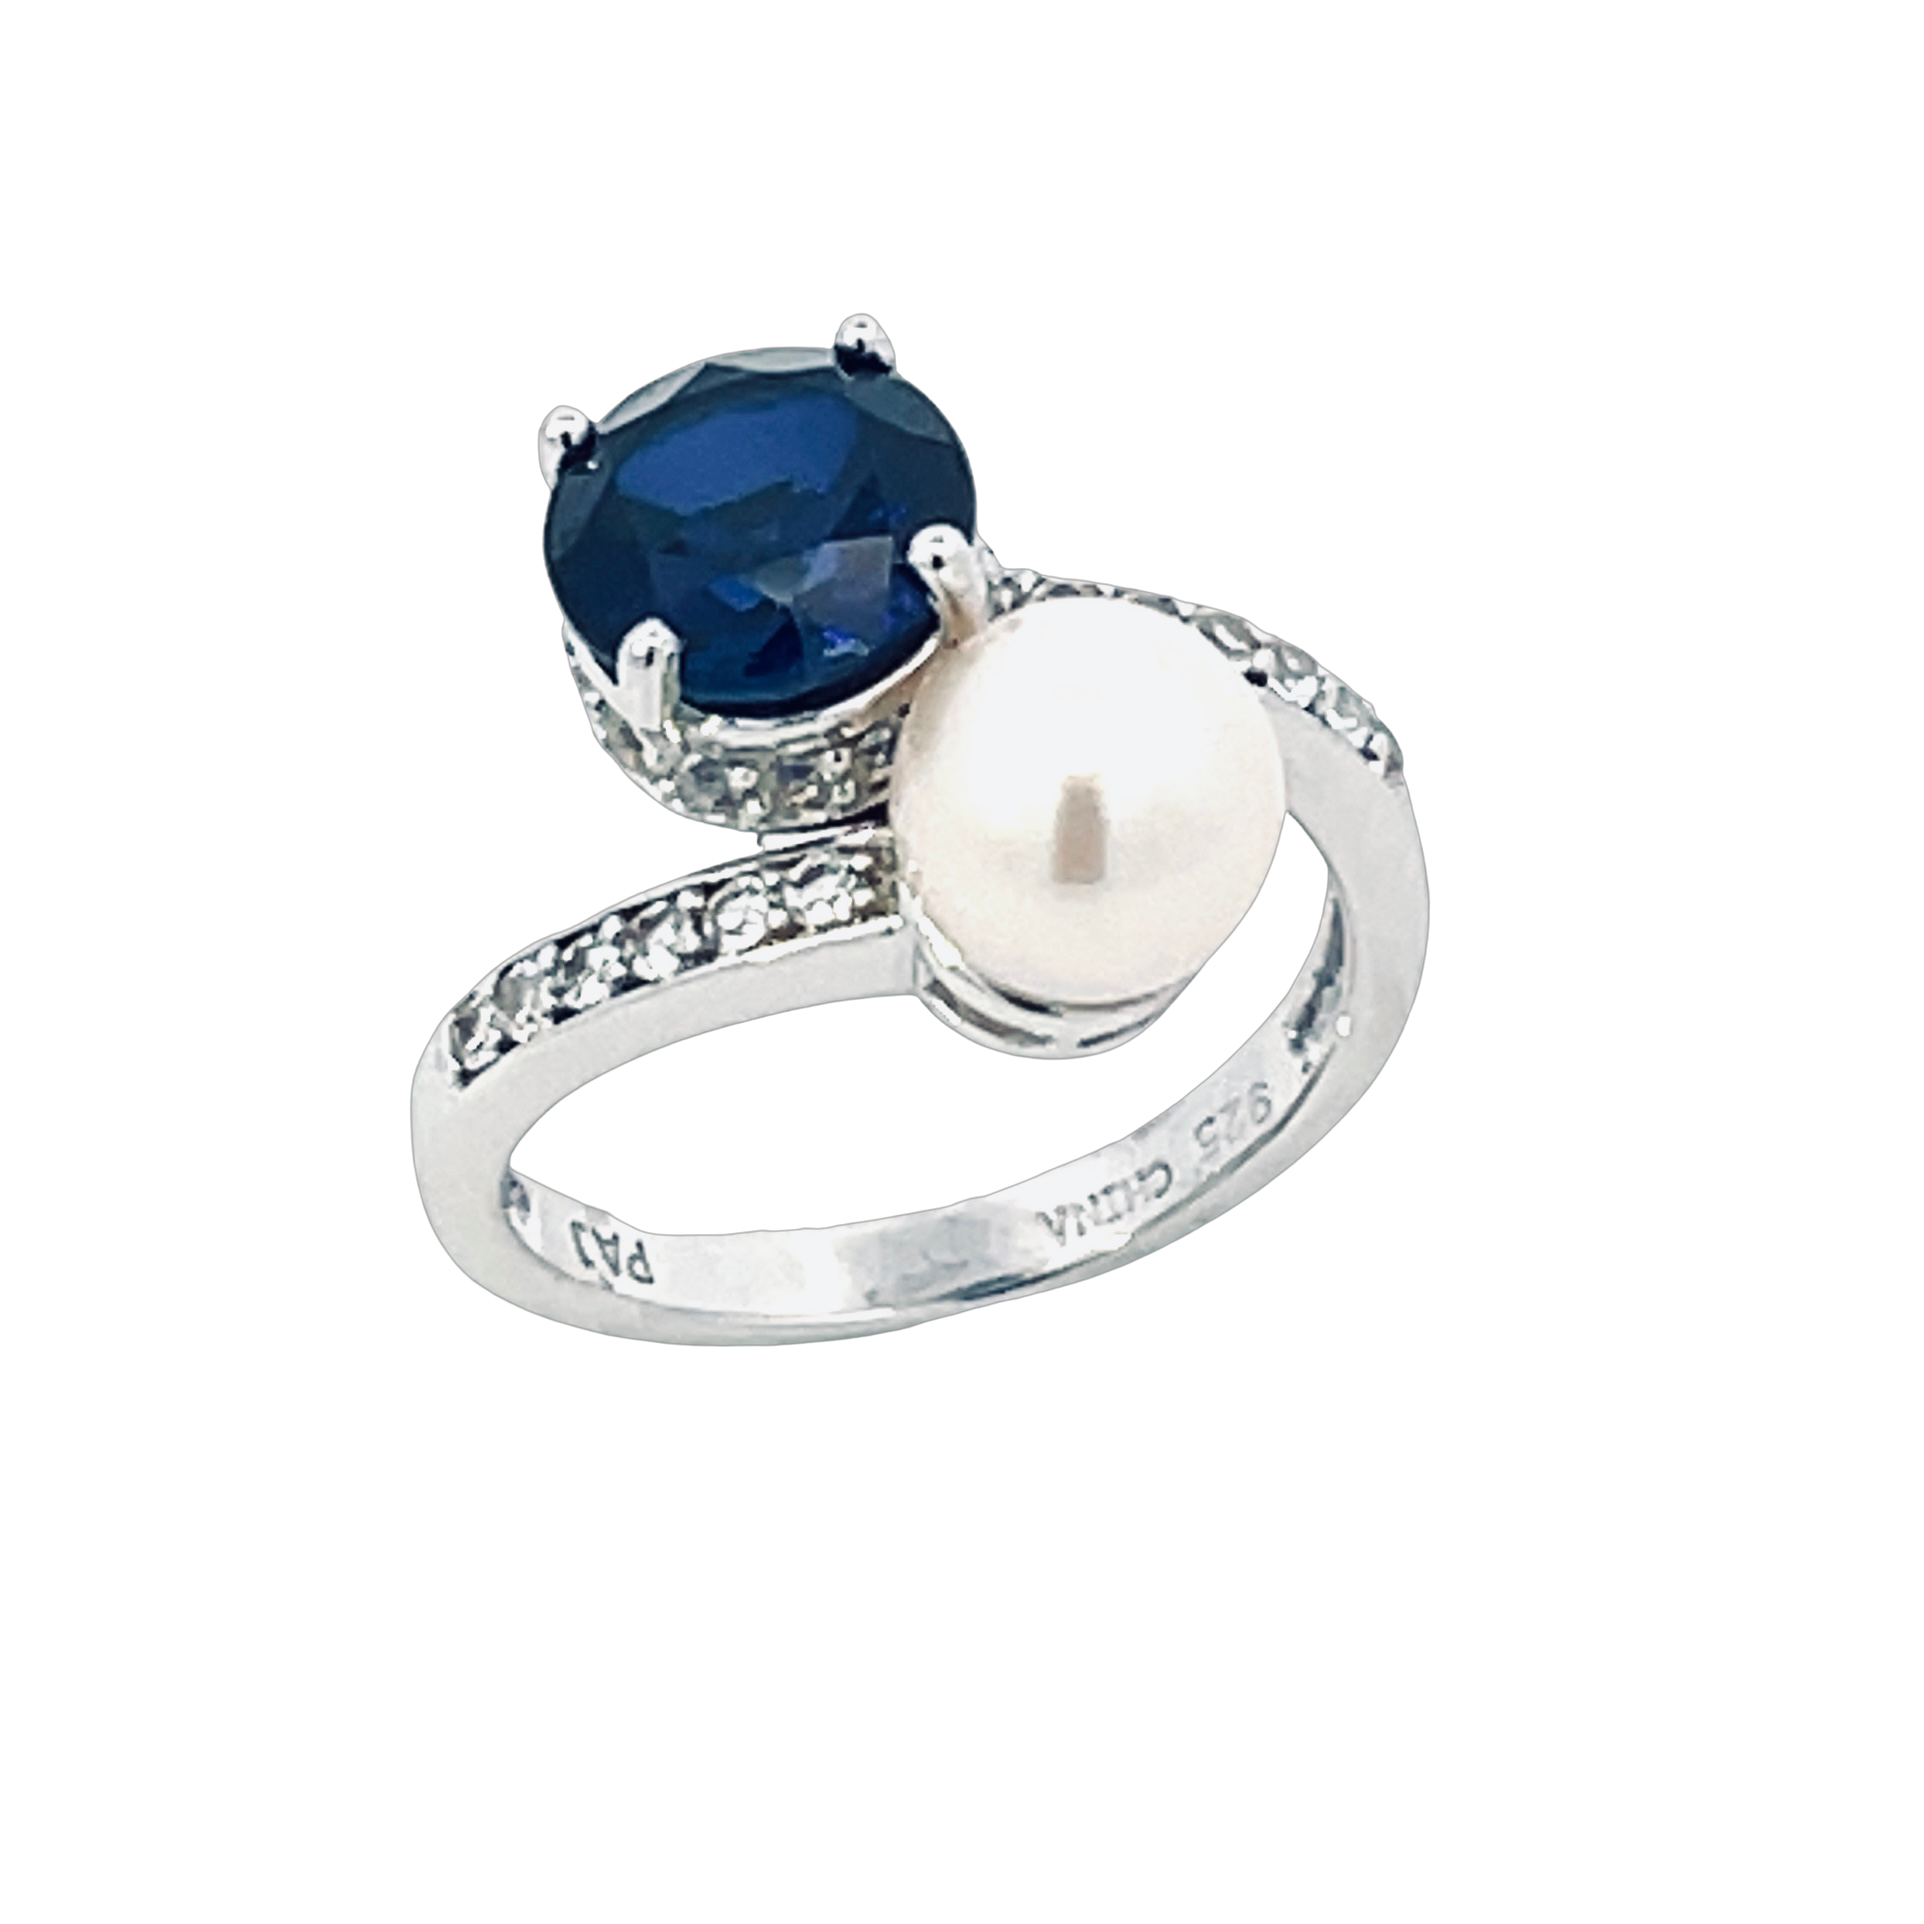 Santorini Ring from Glazd Jewels